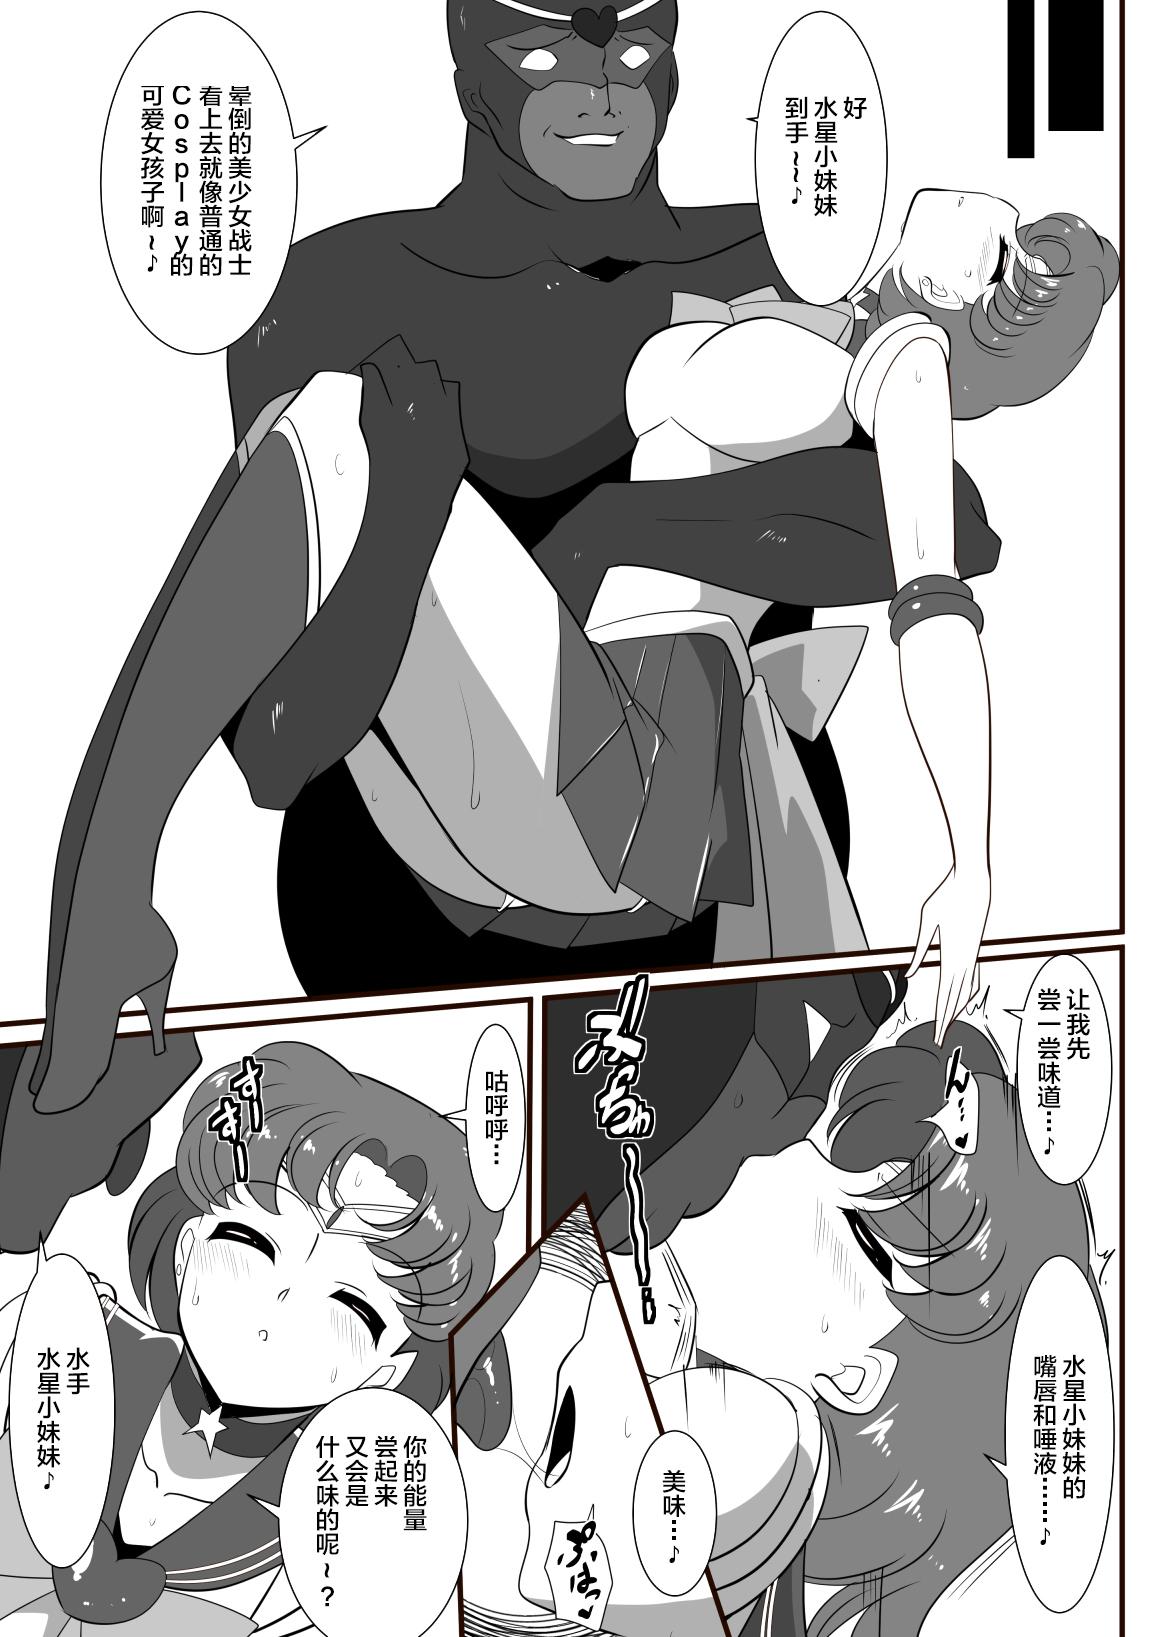 Infiel Suisei no Haiboku - Sailor moon Str8 - Page 5